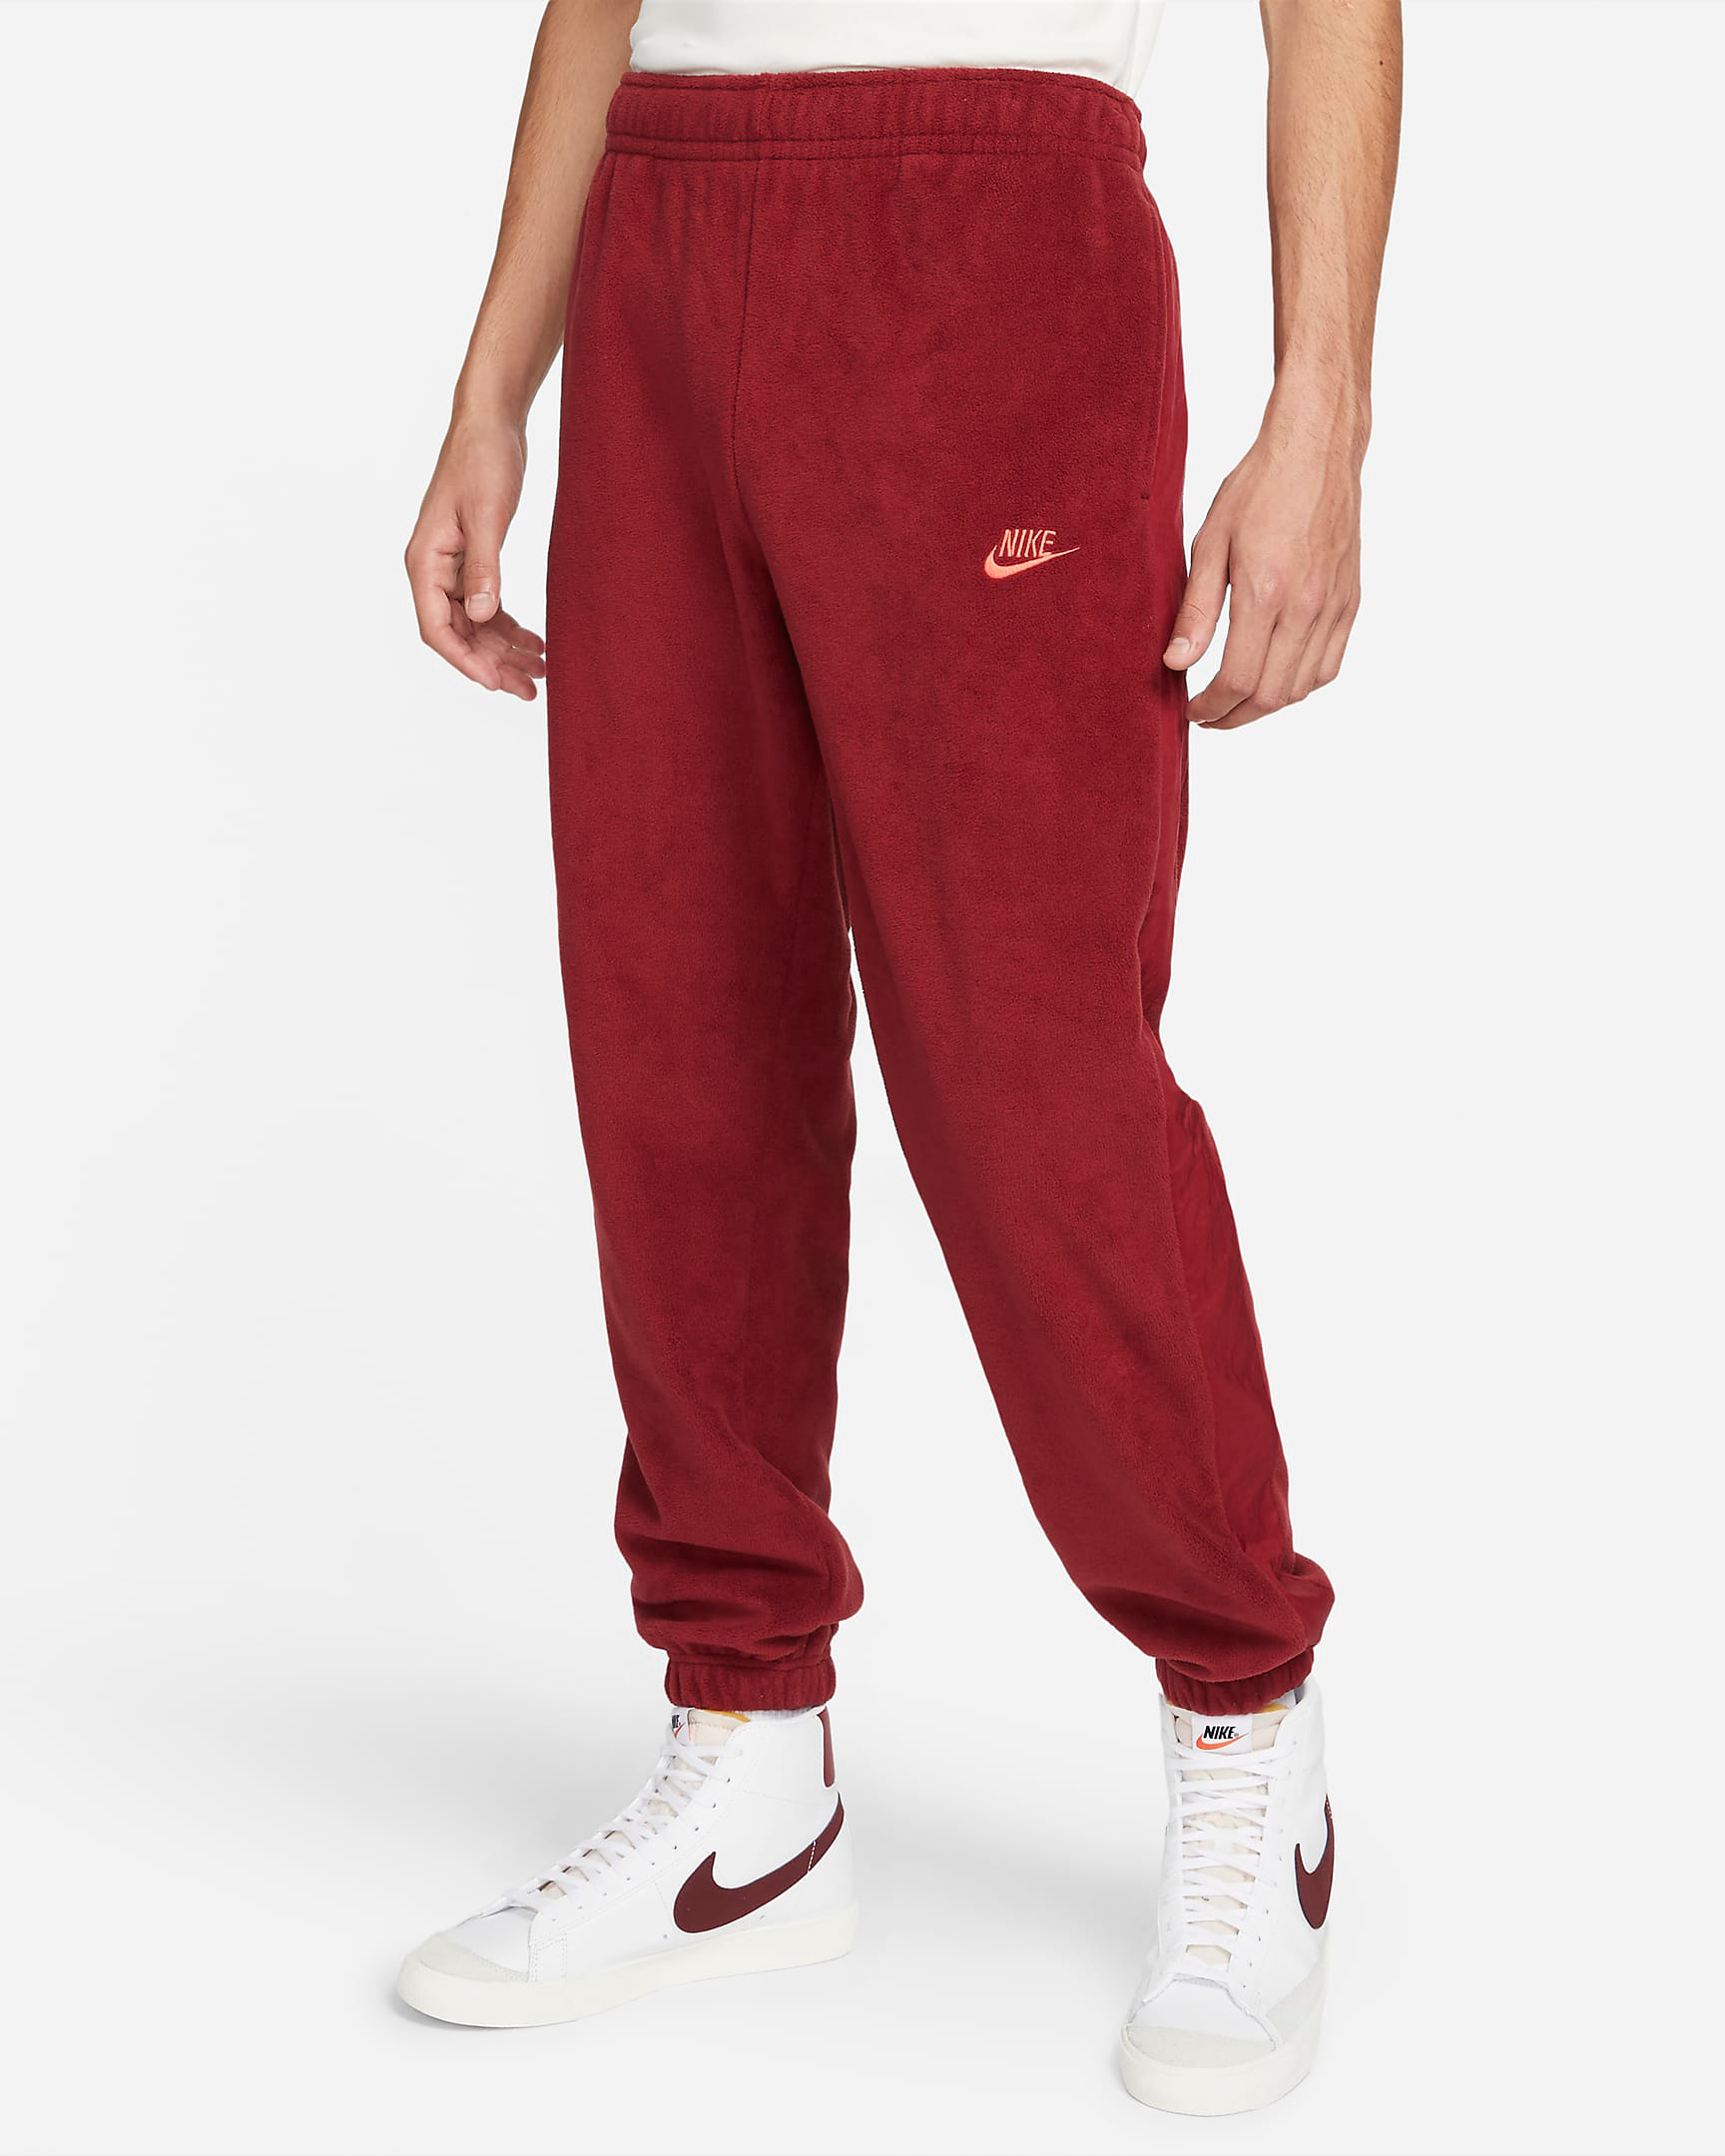 nike-team-red-sport-essentials-fleece-pants